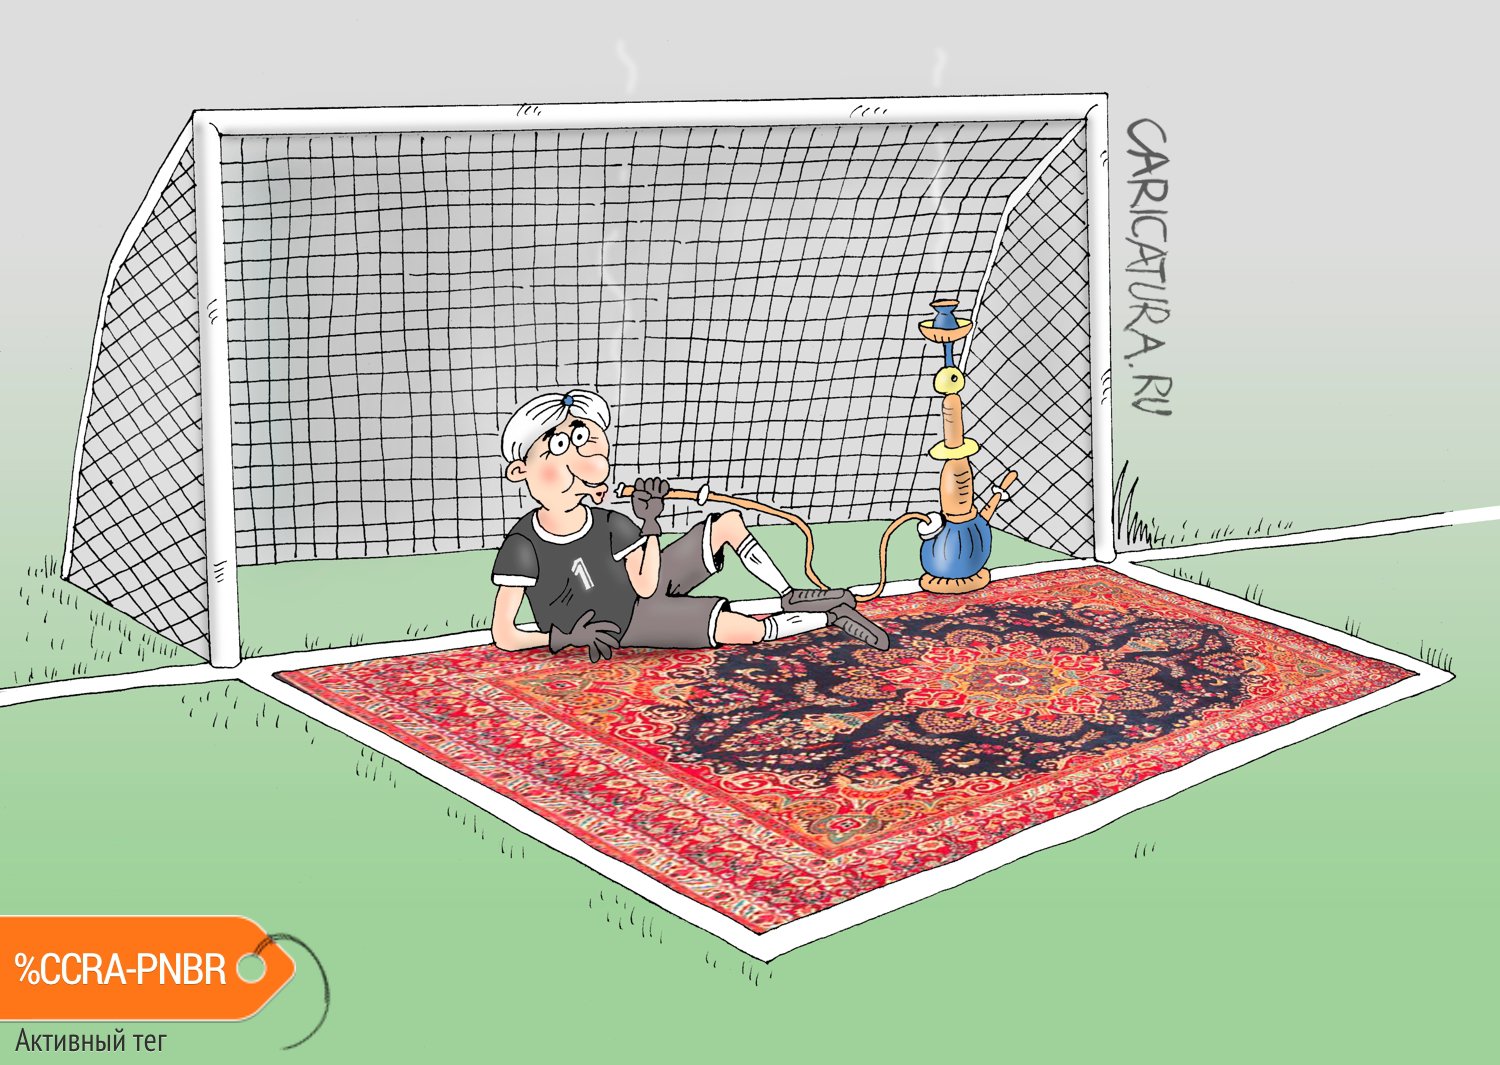 Карикатура "Эй, вратарь!", Валерий Тарасенко